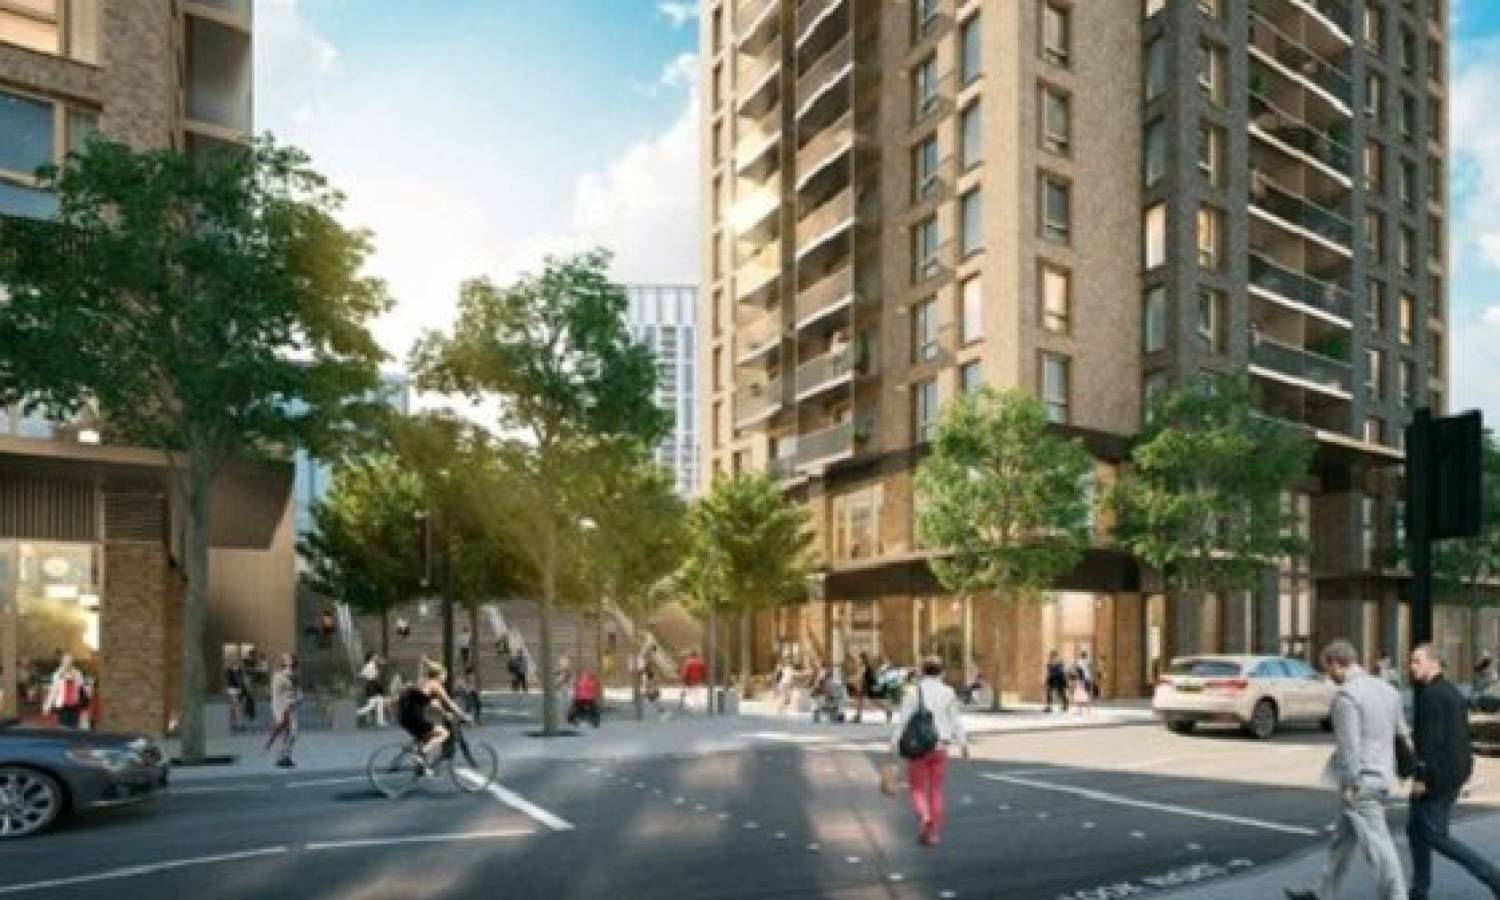 Sir Robert McAlpine starts work on Menta’s East Croydon’s regeneration